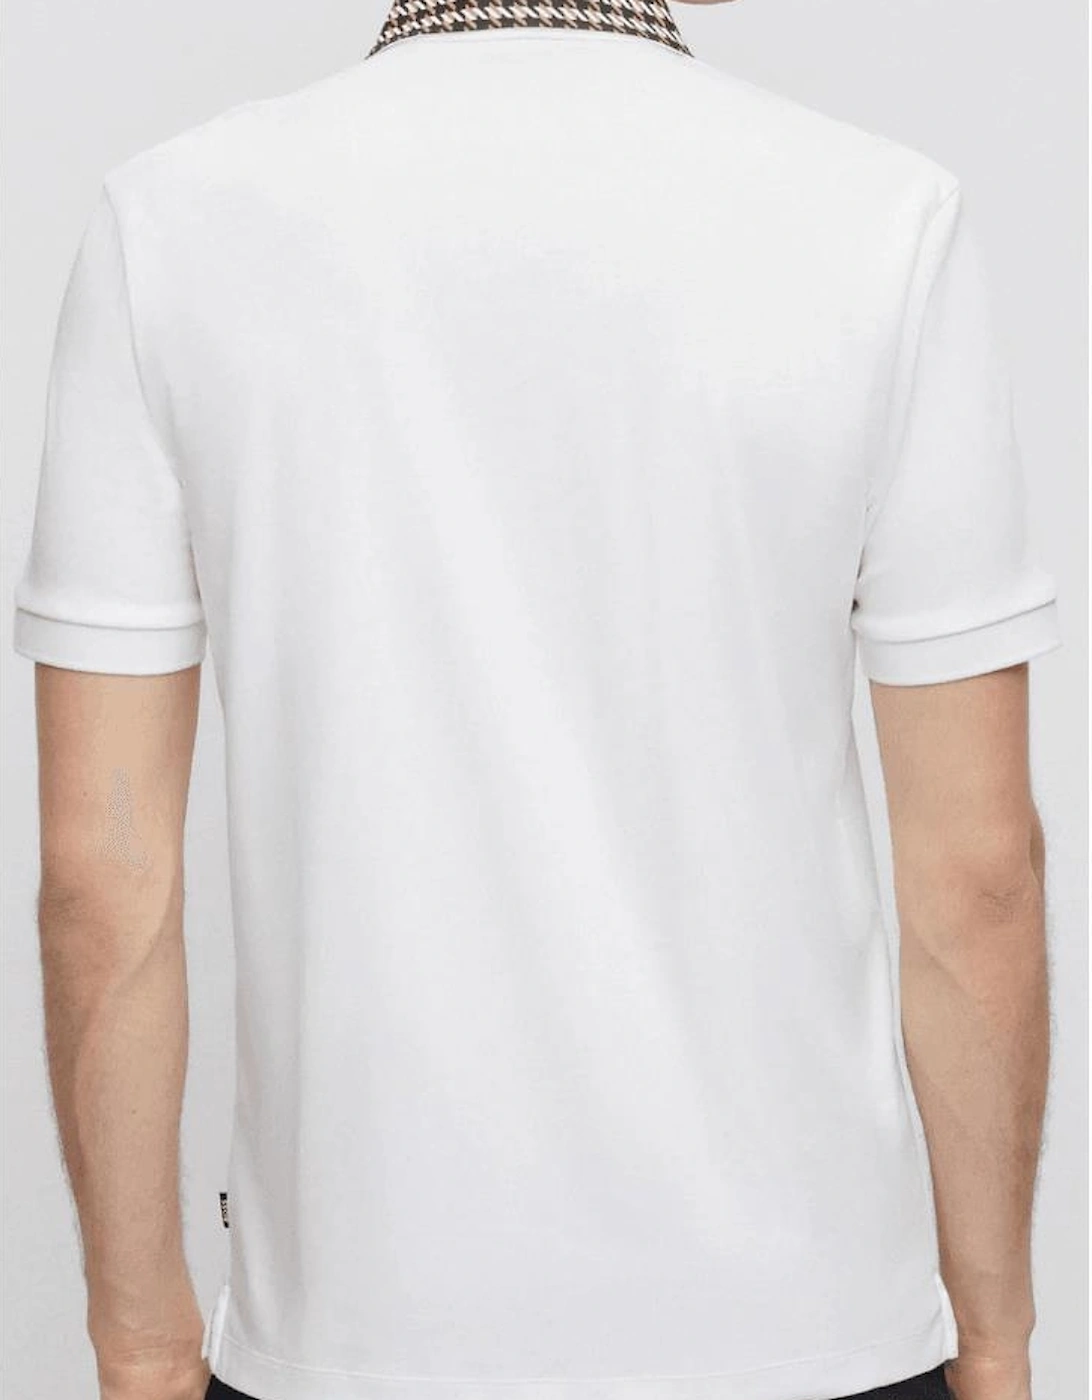 Parlay 180 Collar Design Slim Fit White Polo Shirt